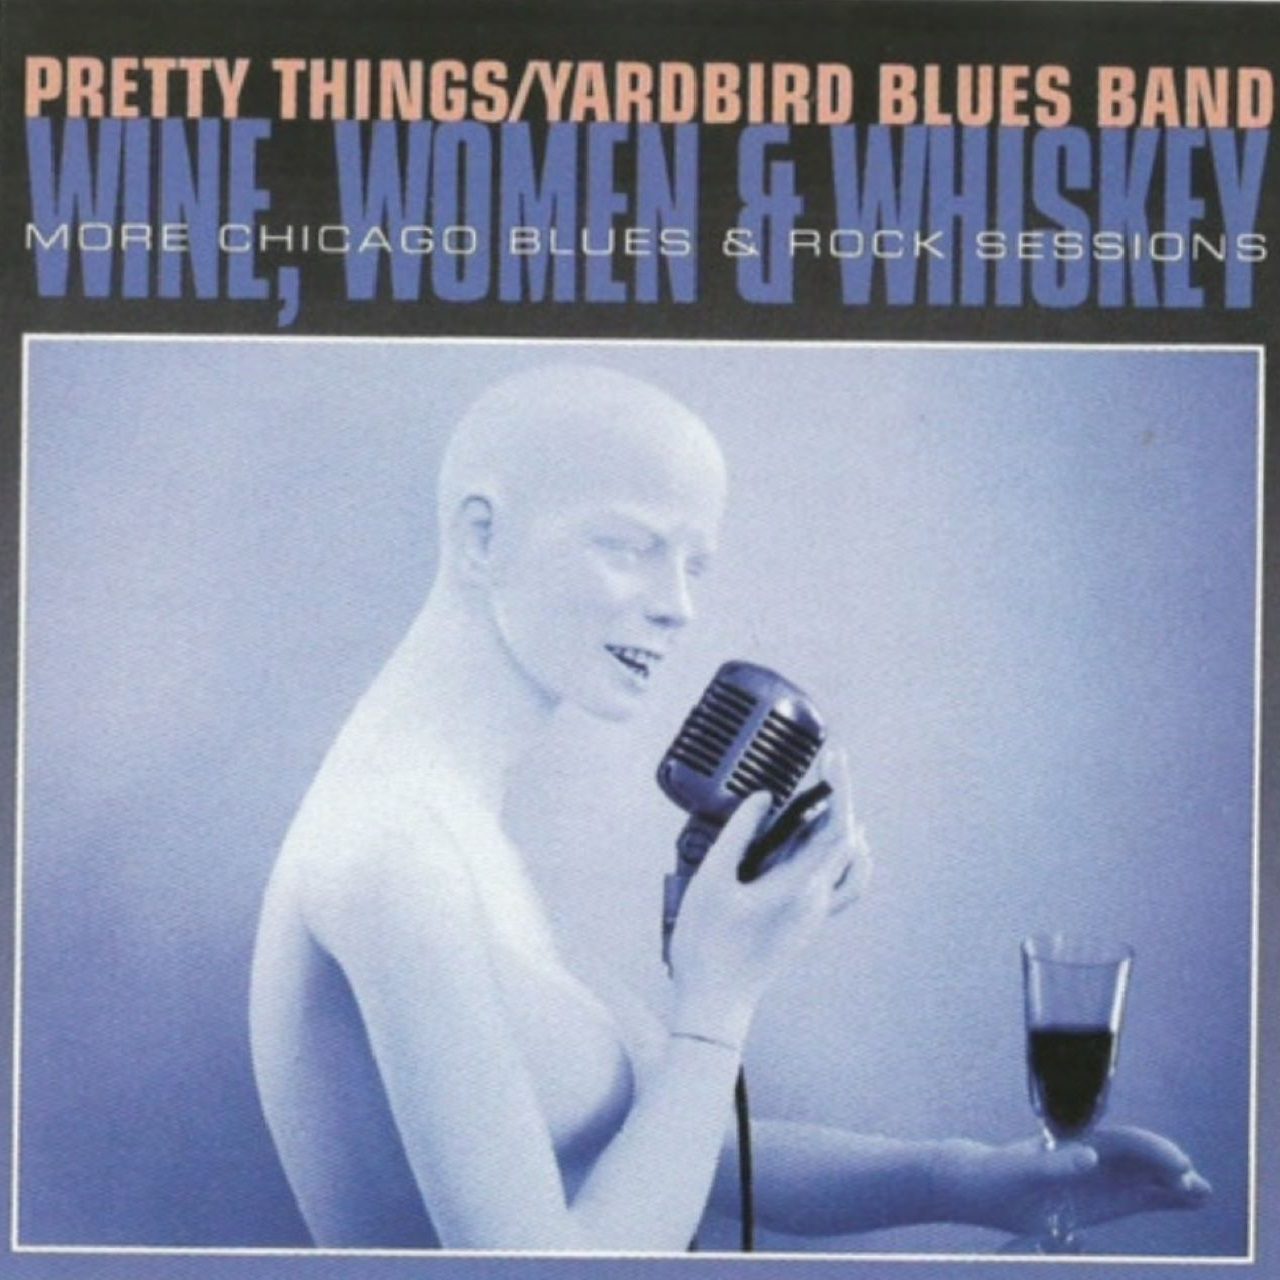 Pretty Things & Yardbird Blues Band – Wine Women & Whiskey cover album